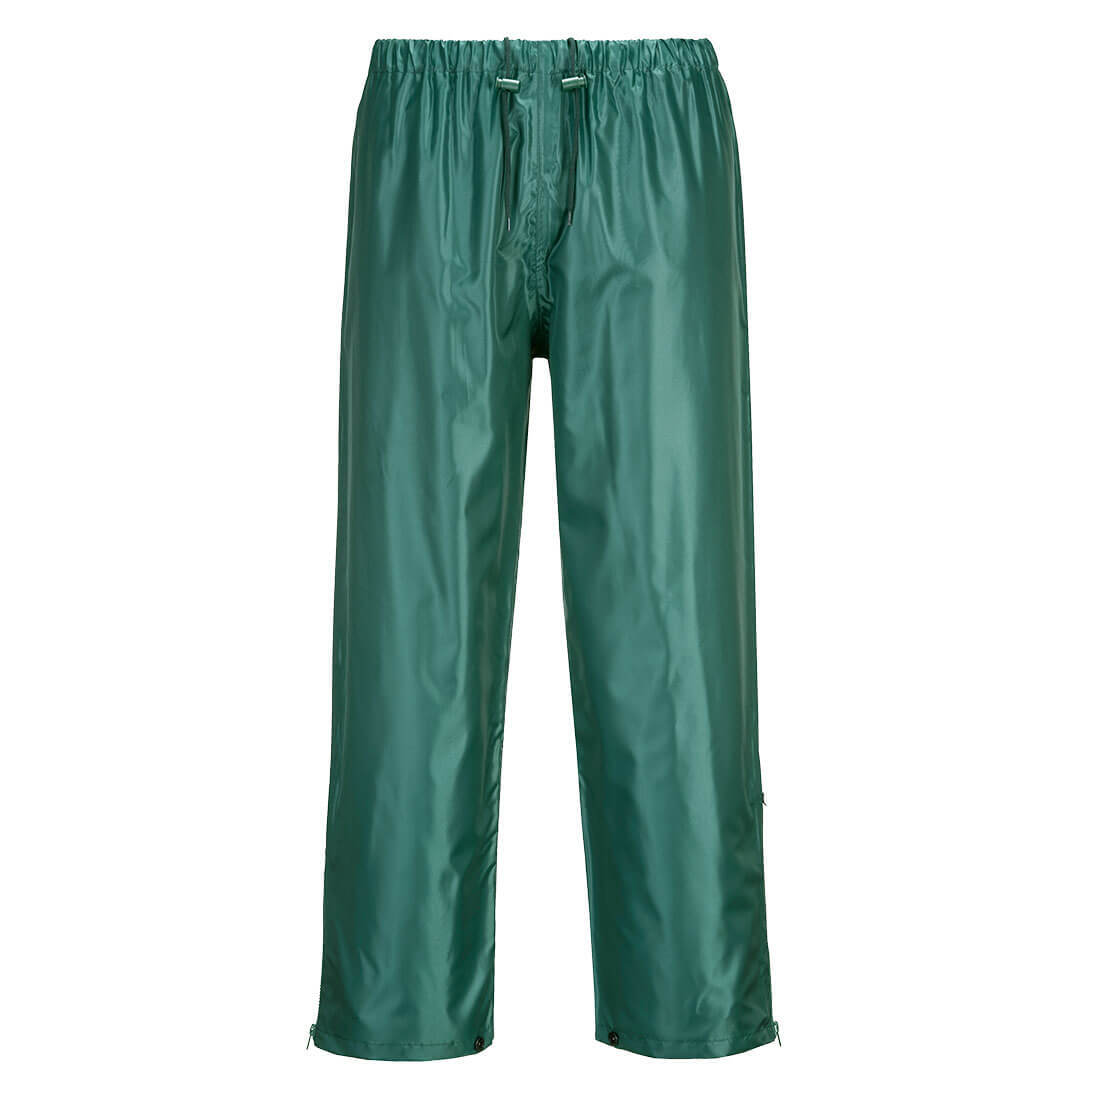 Prime Mover Wet Weather Pants Green 4X/5X Regular